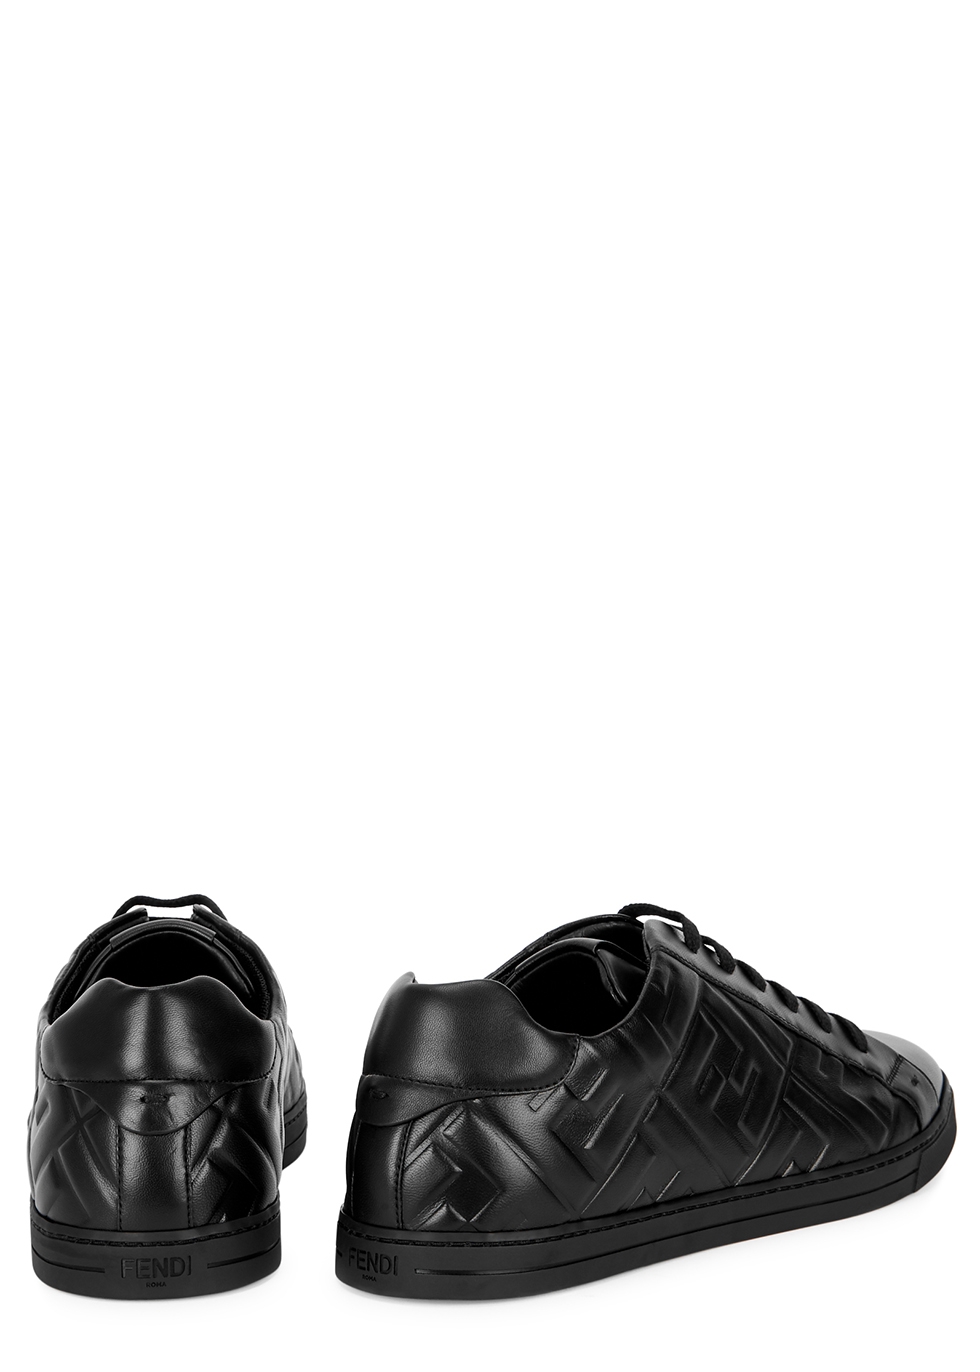 Fendi FF black leather sneakers 